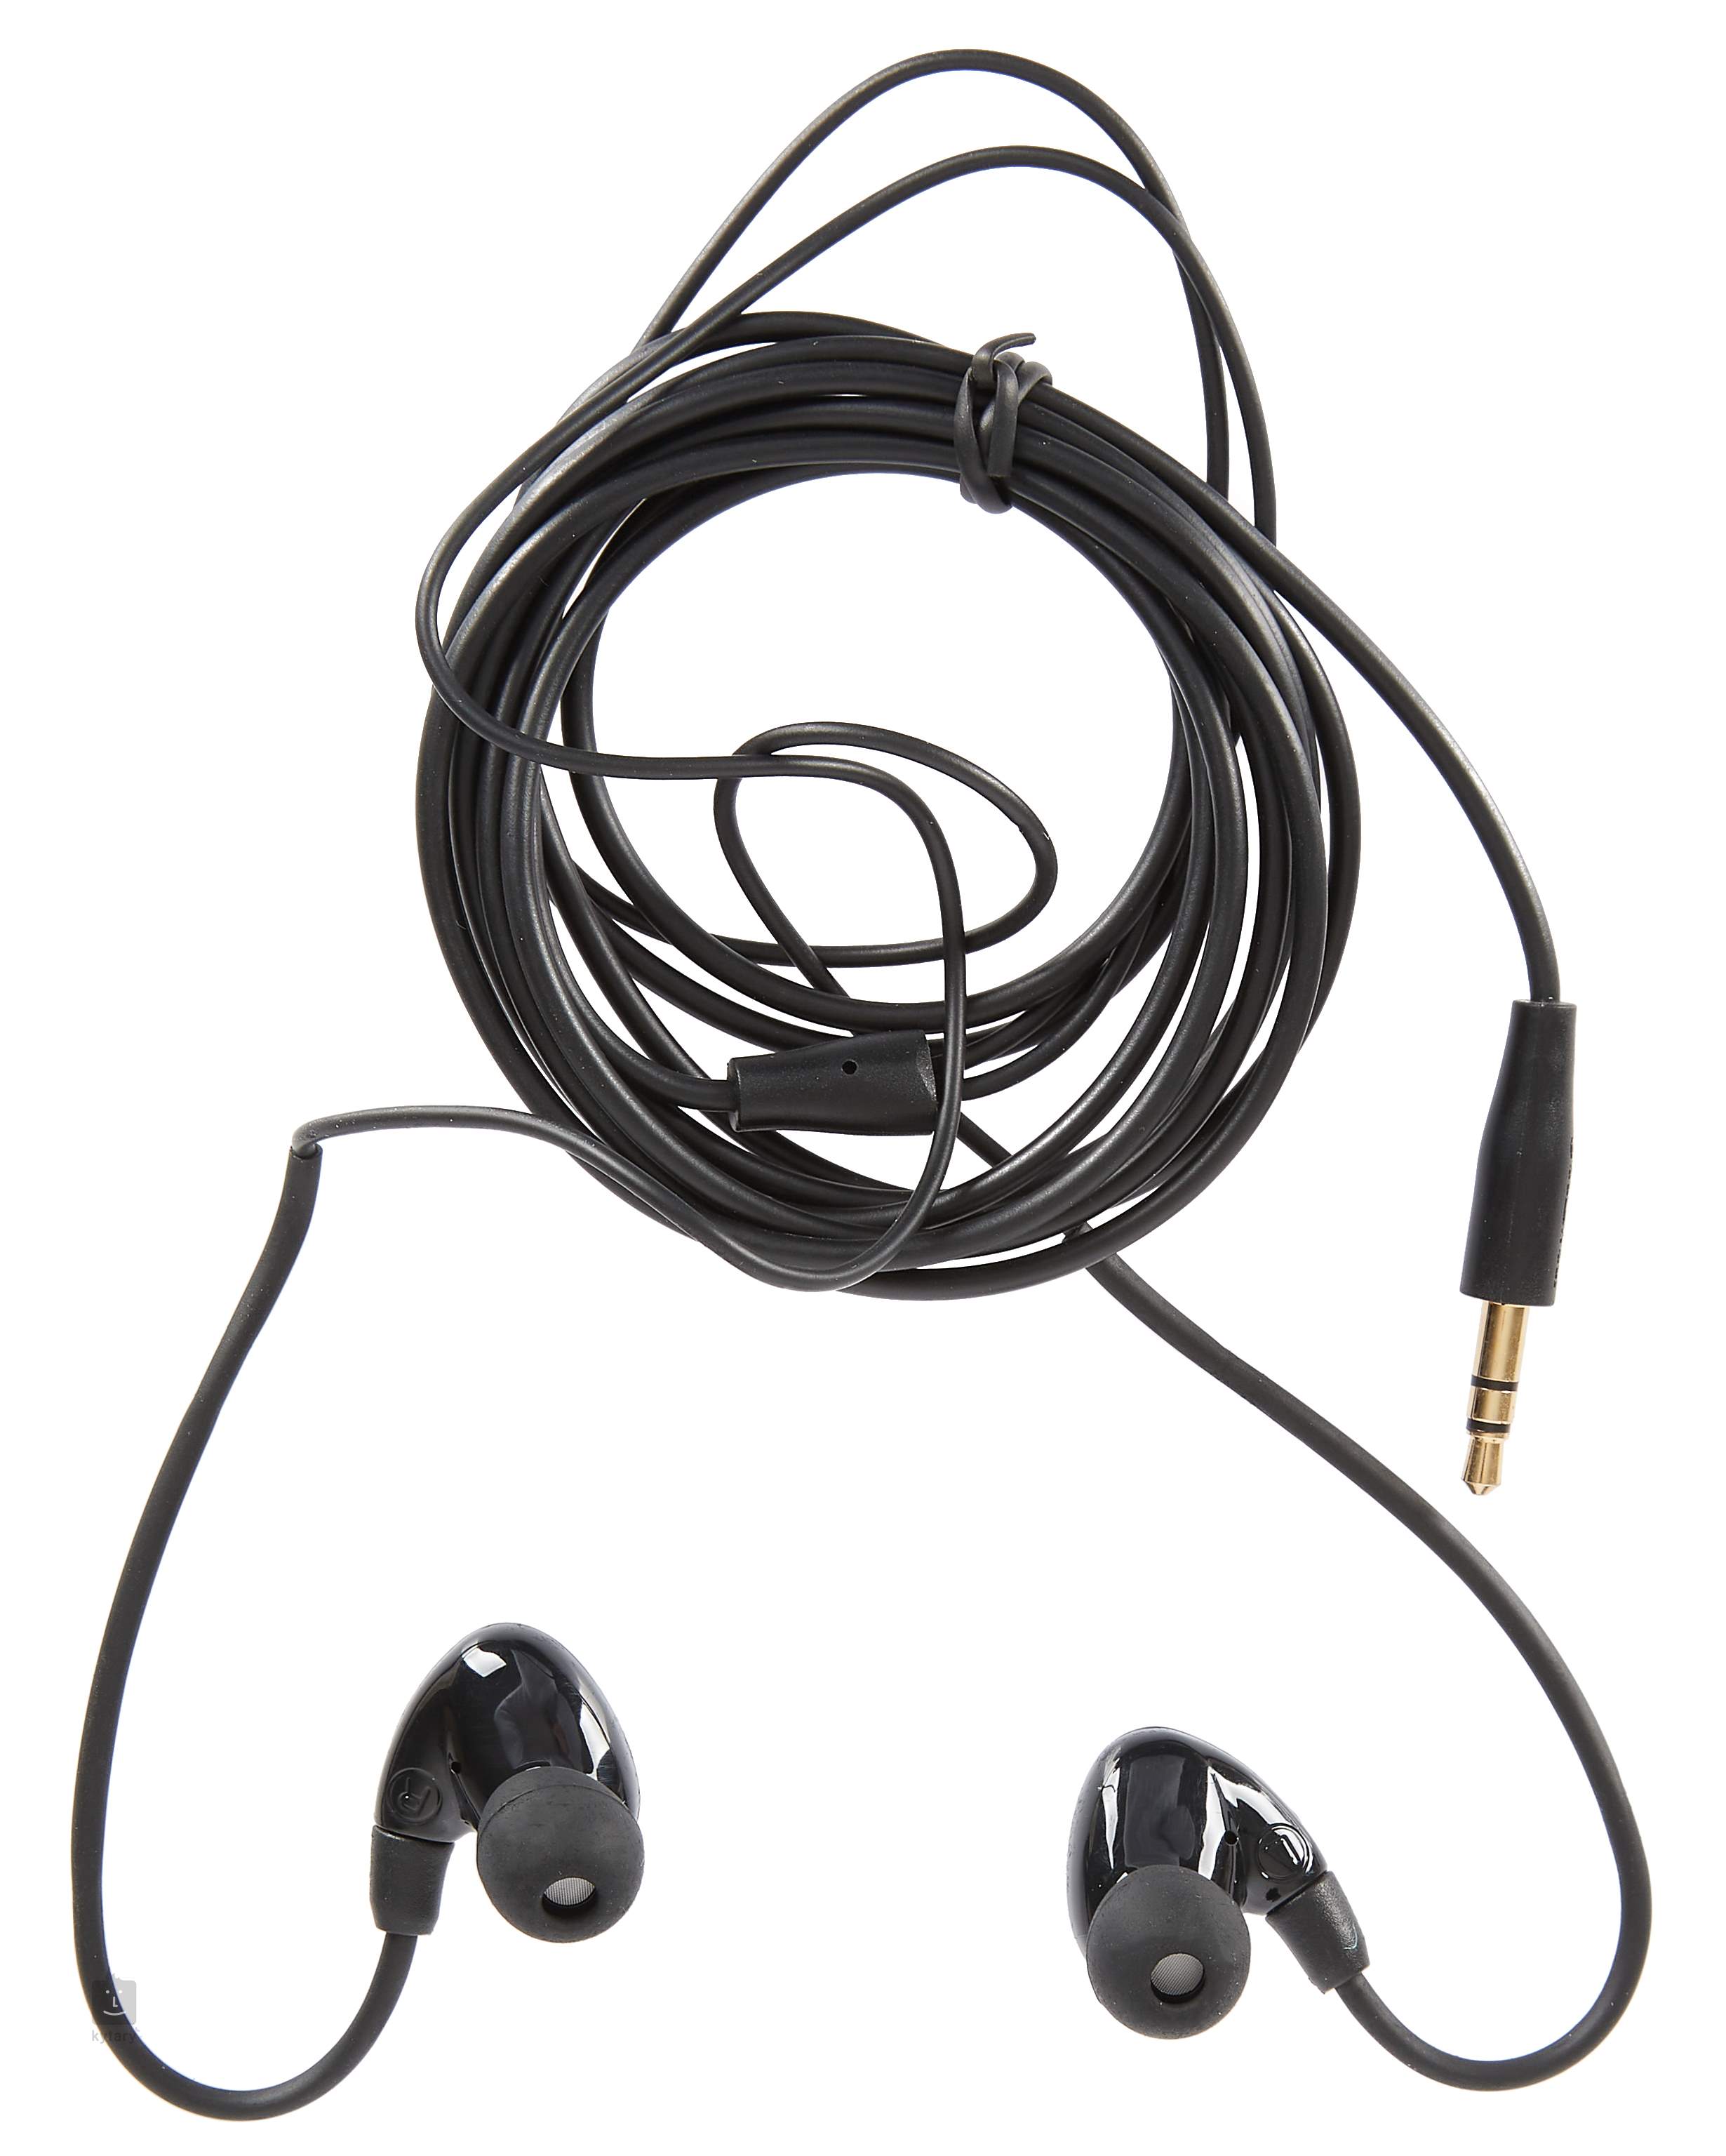 takstar cuffie auricolari in-ear monitoring takstar 2260 black